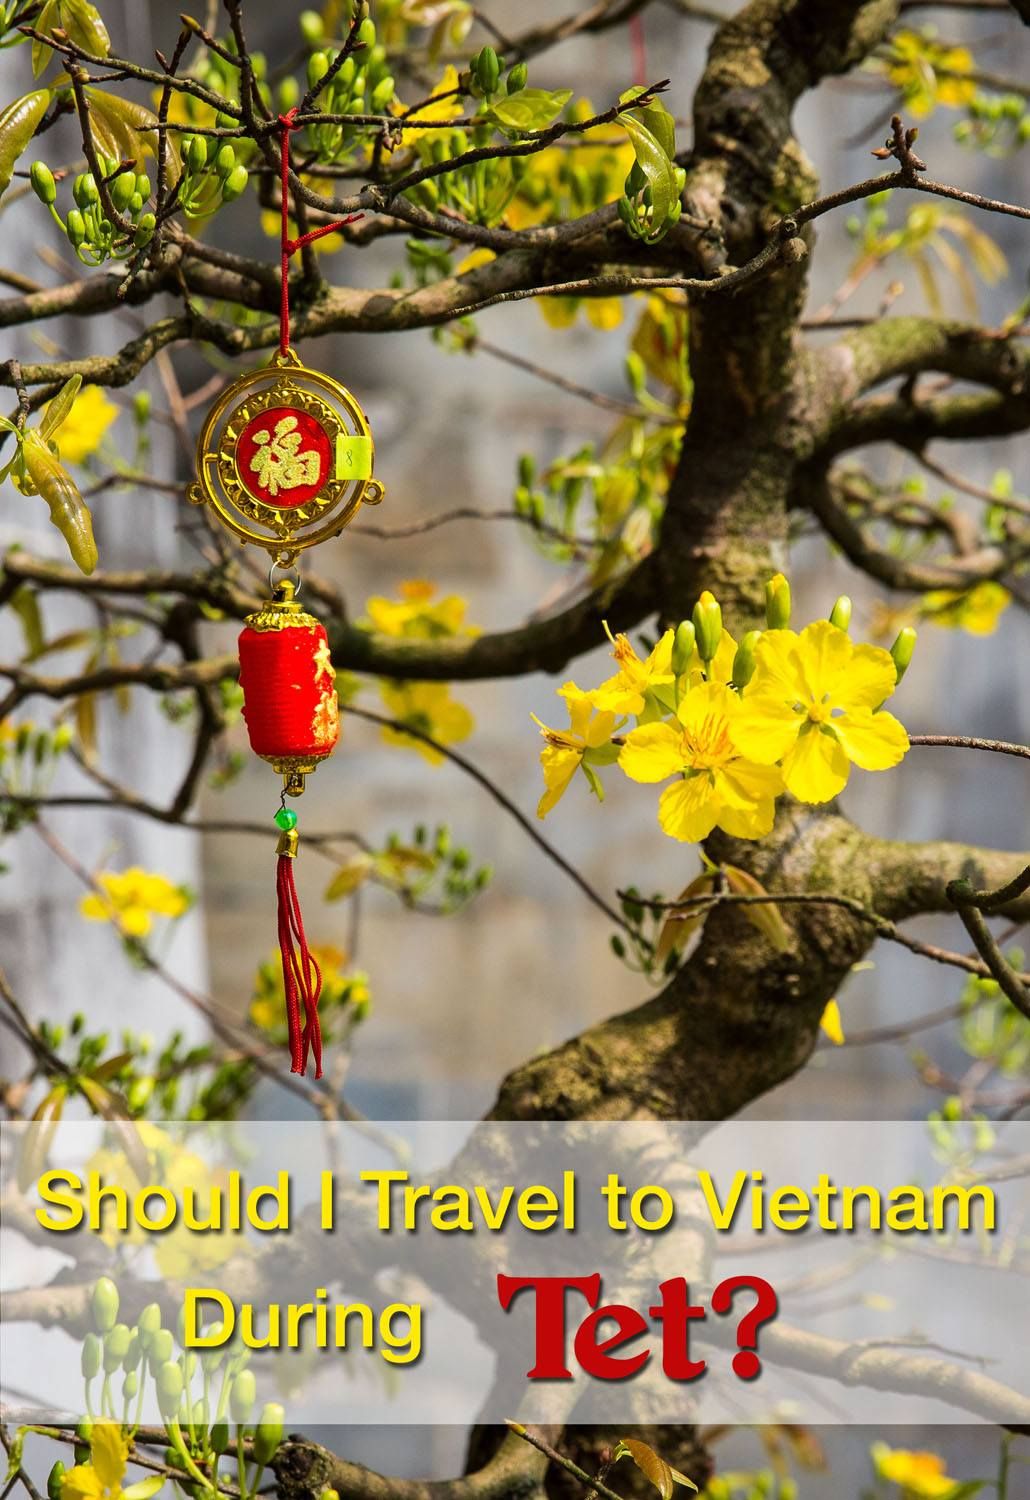 Should I Travel to Vietnam During Tet